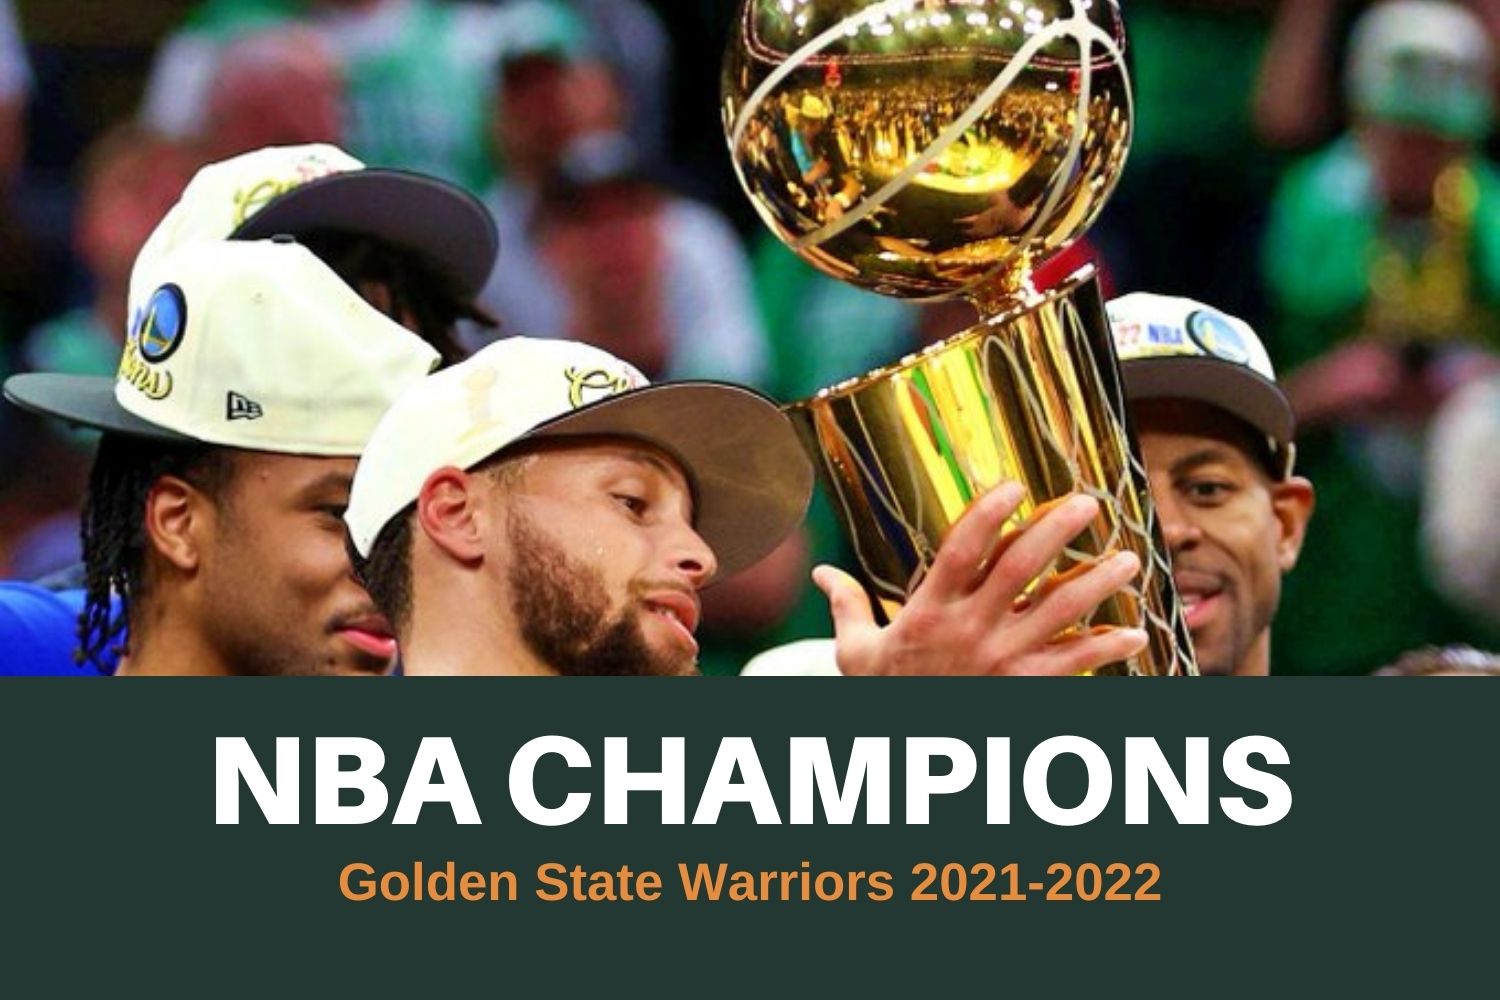 Golden State Warriors win fourth NBA championship